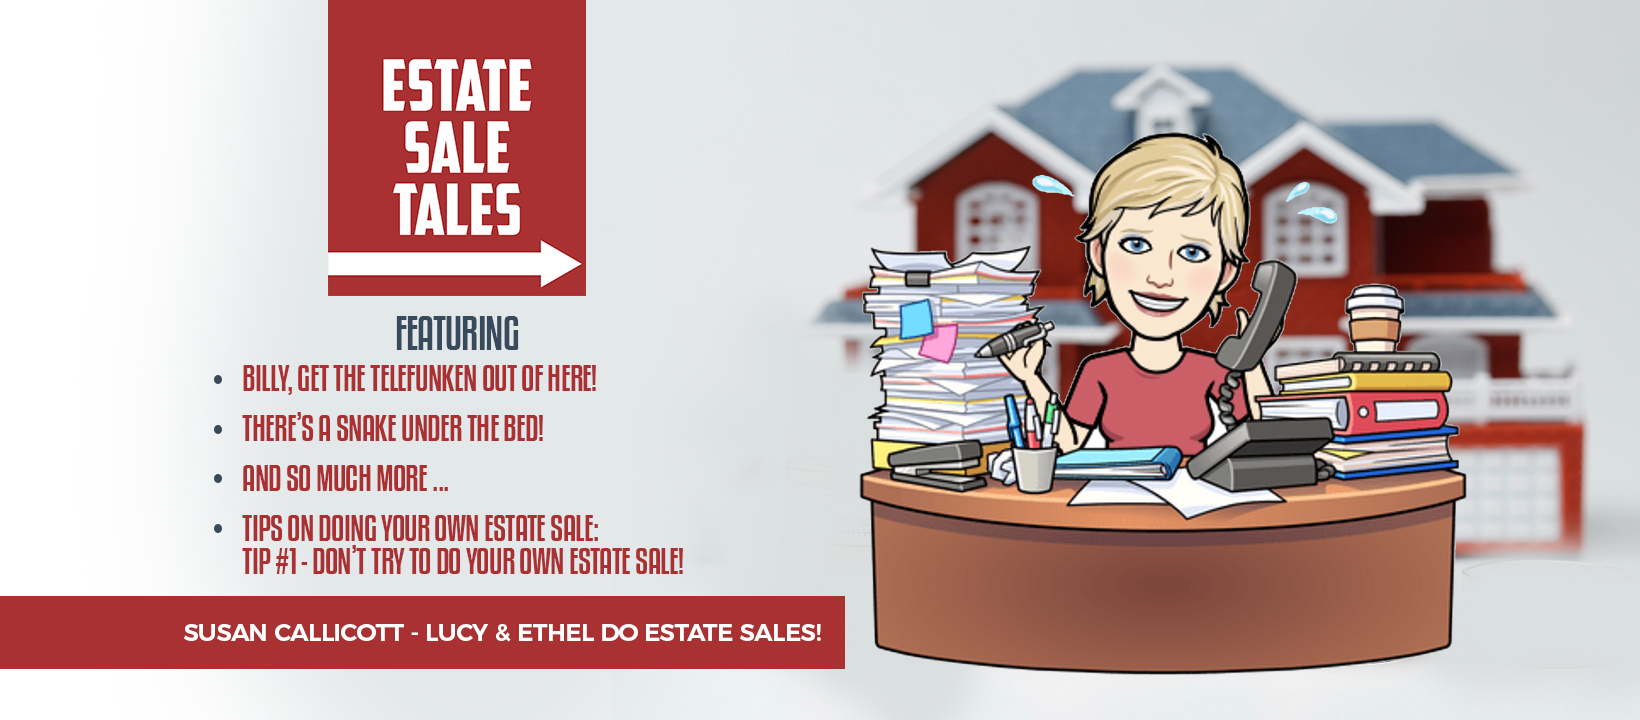 Estate Sale Tales Logo